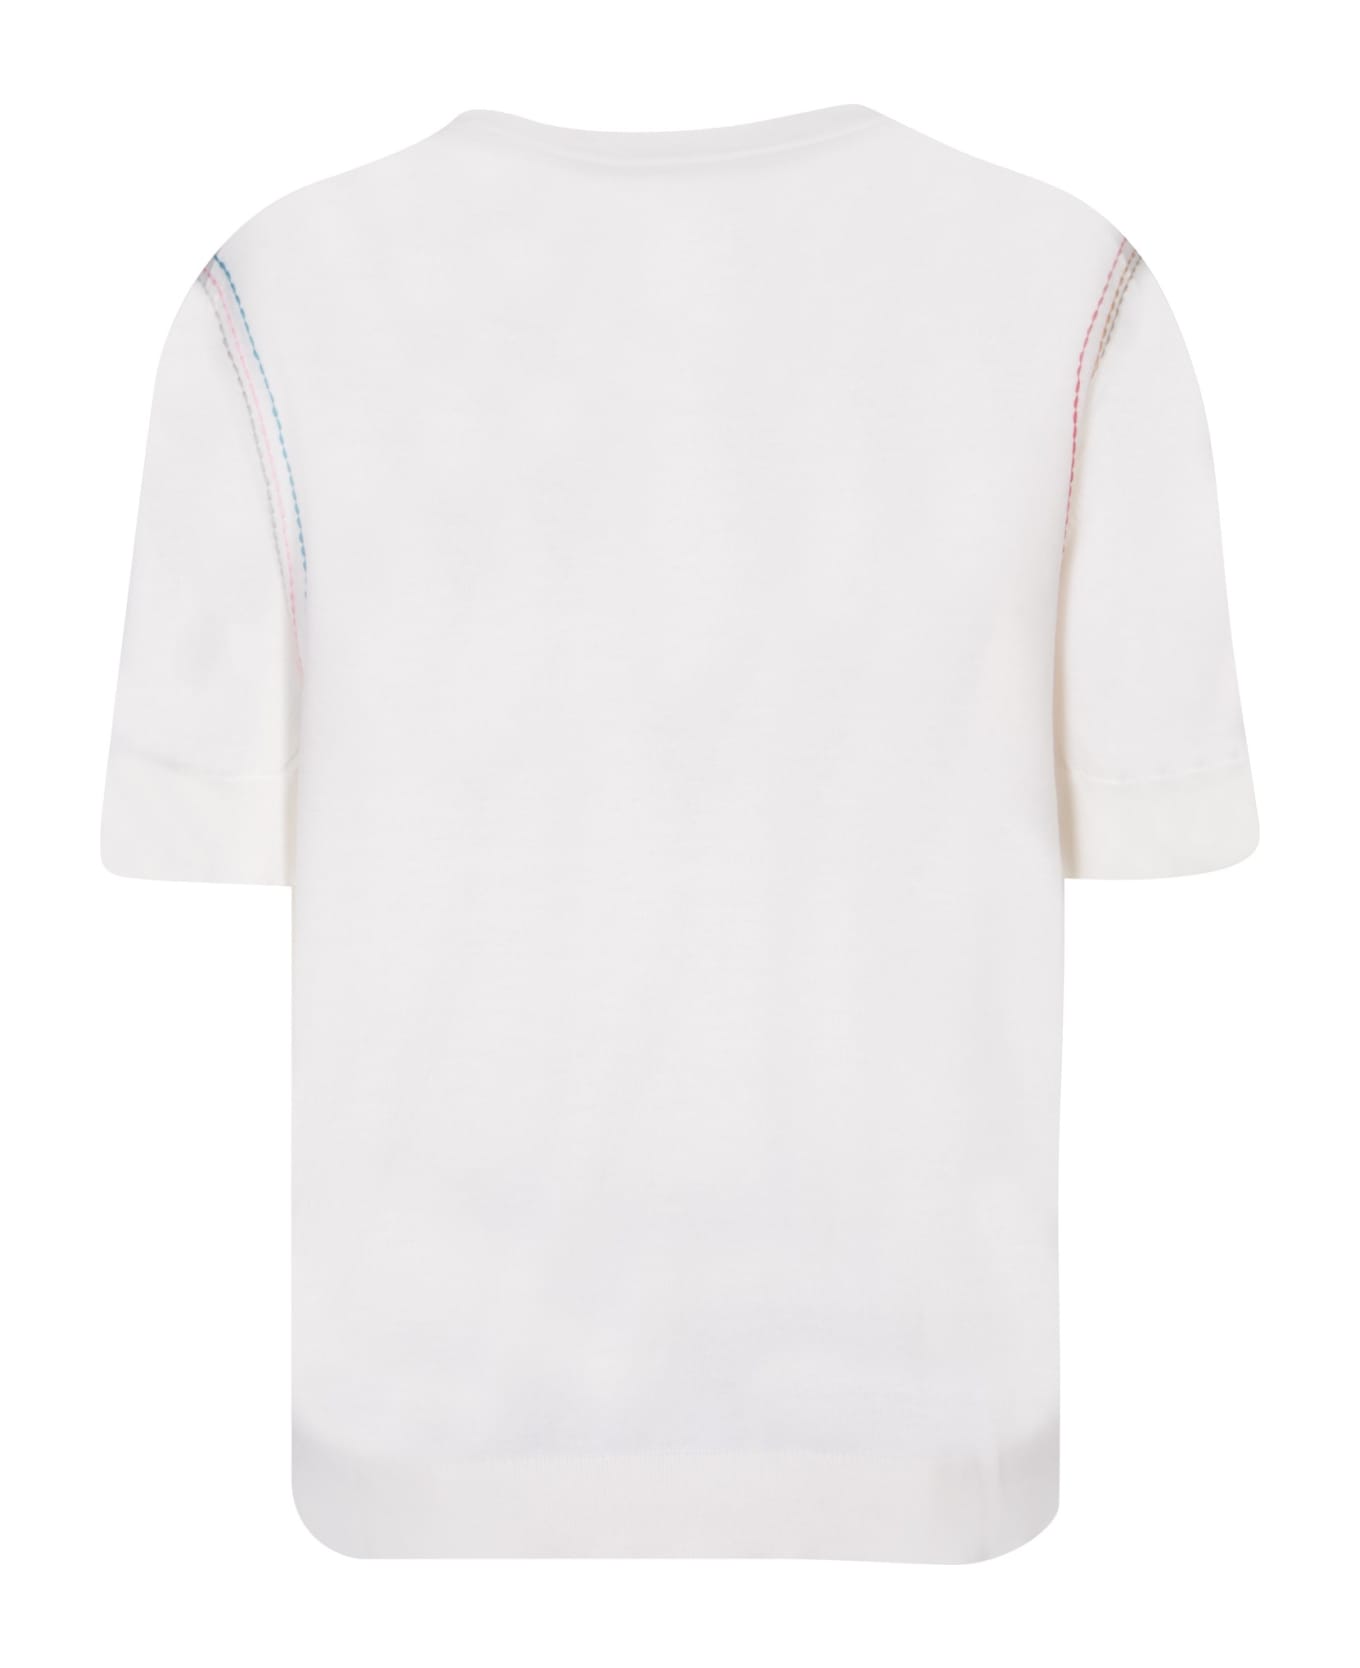 Paul Smith Short Sleeves White T-shirt - White